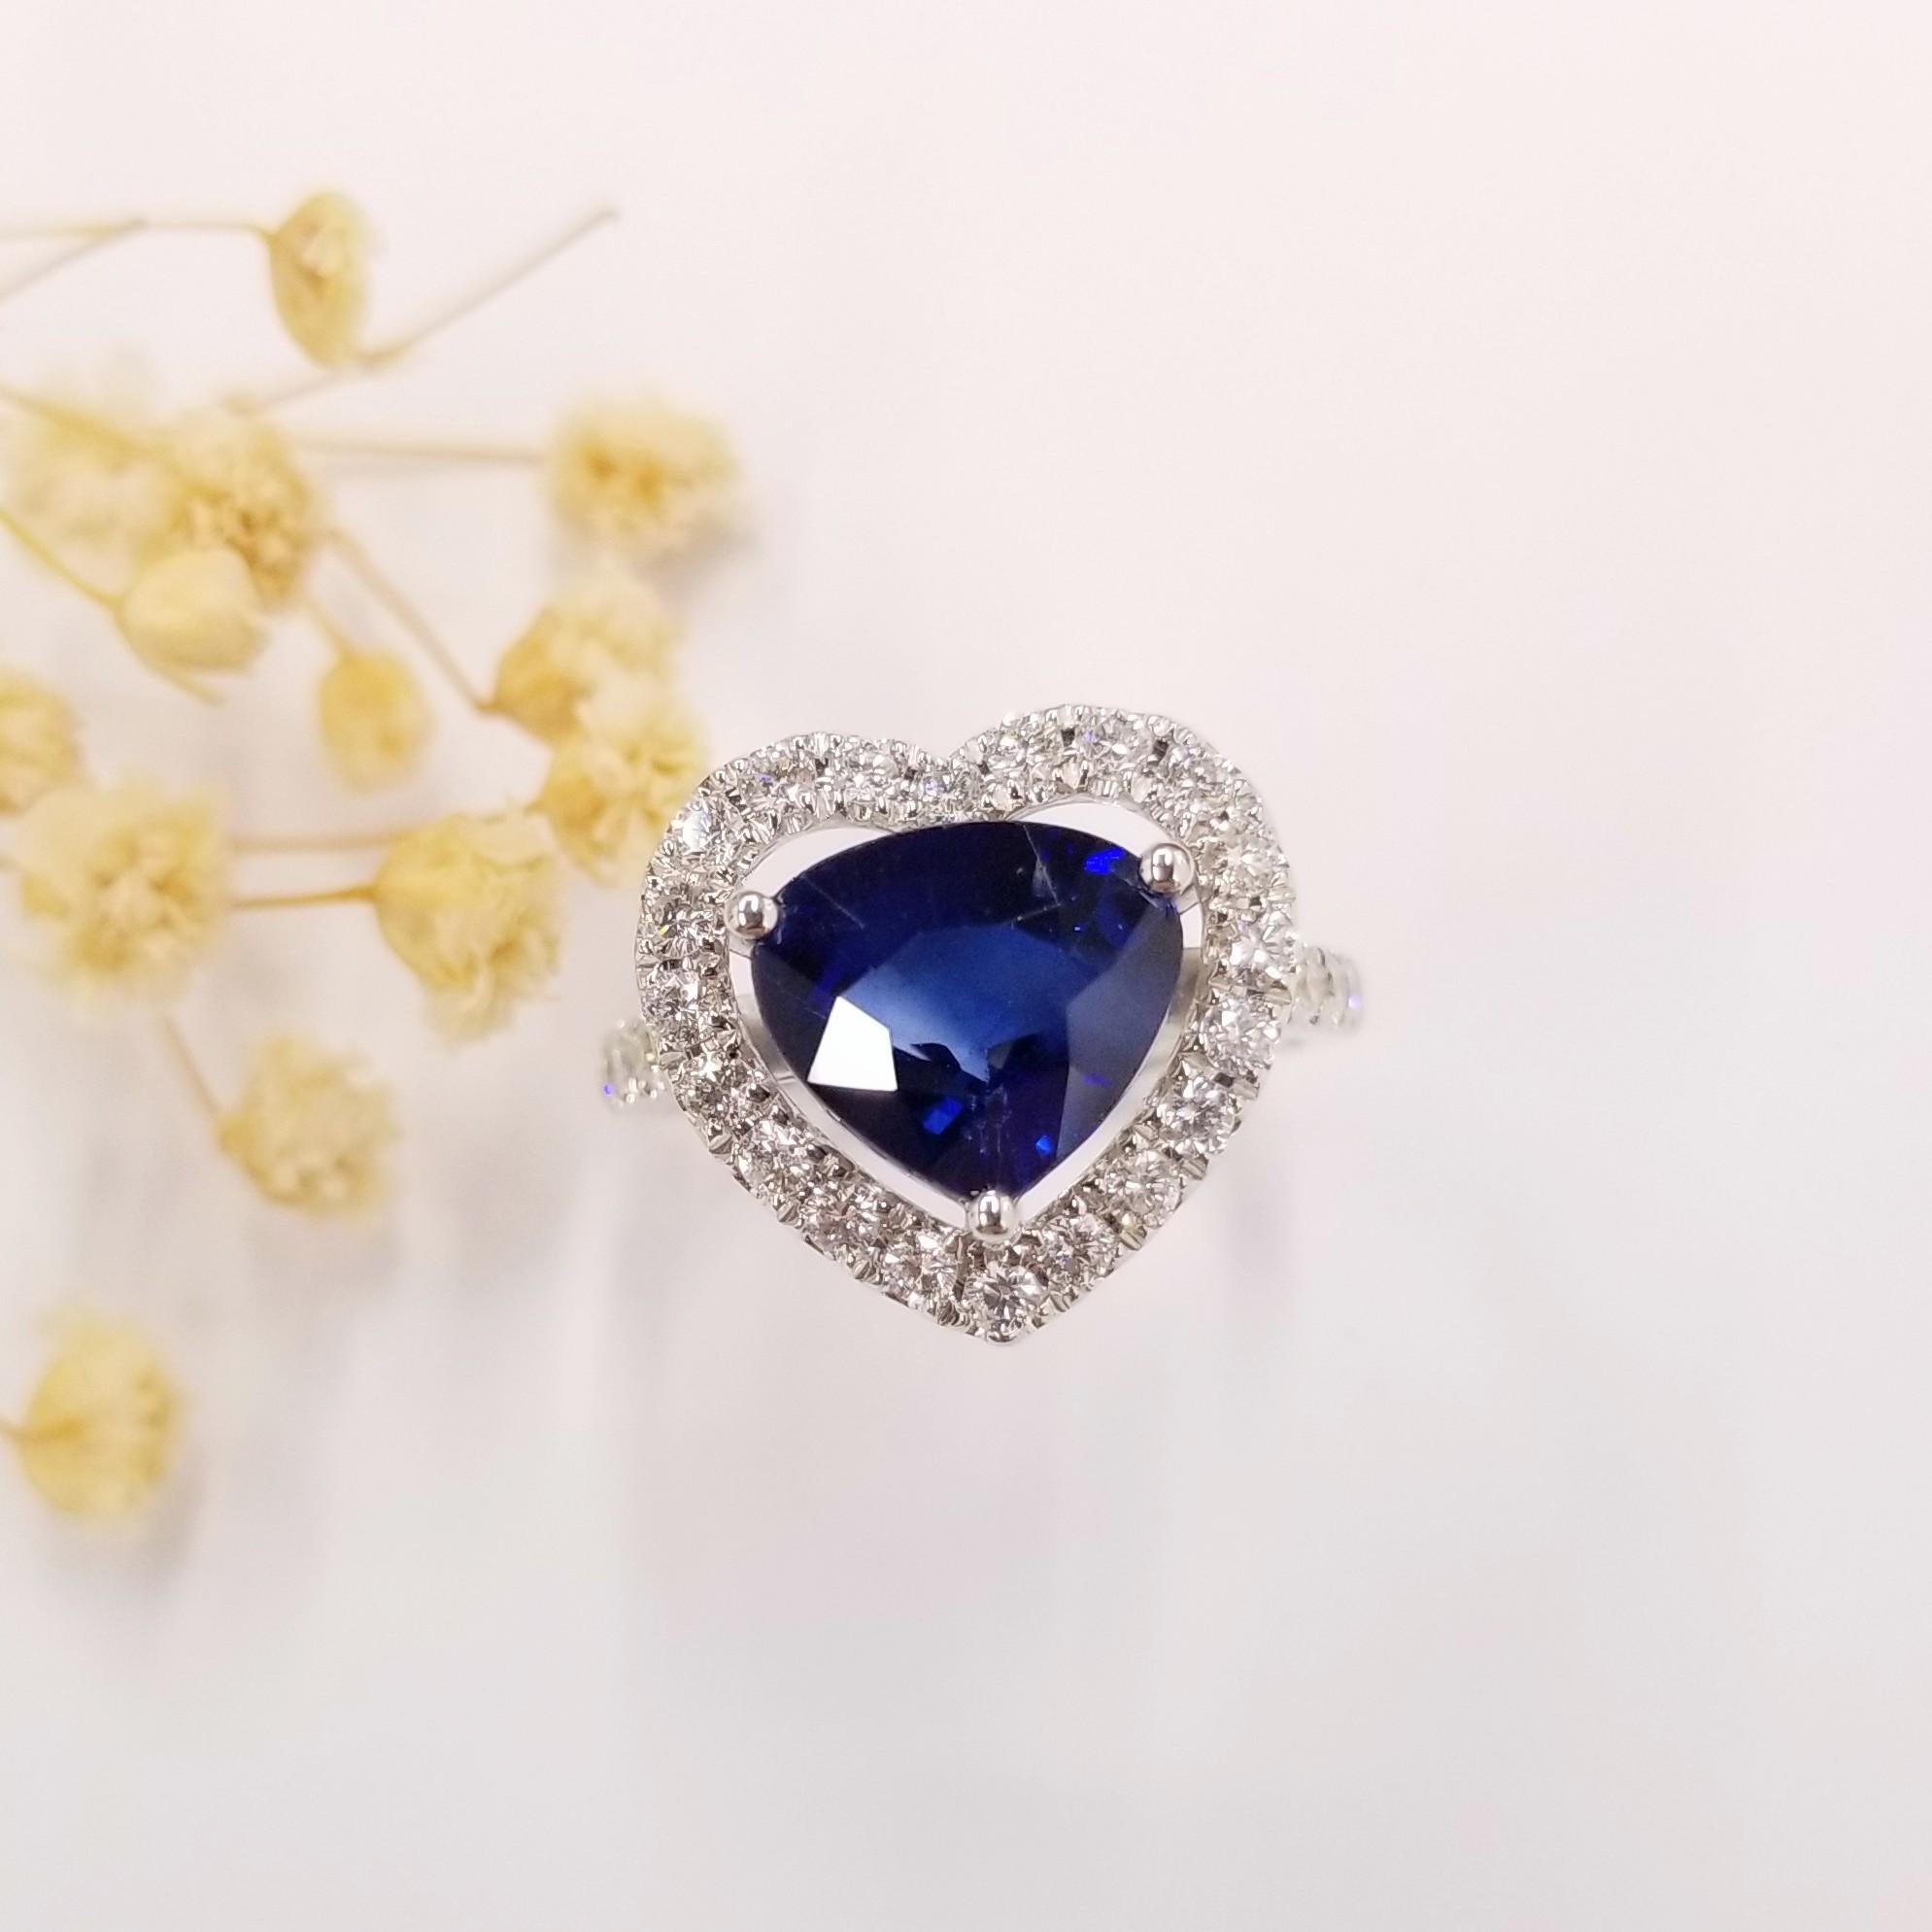 Pear Cut IGI Certified 3.15Carat Blue Sapphire & Diamond Ring in 18K White Gold For Sale